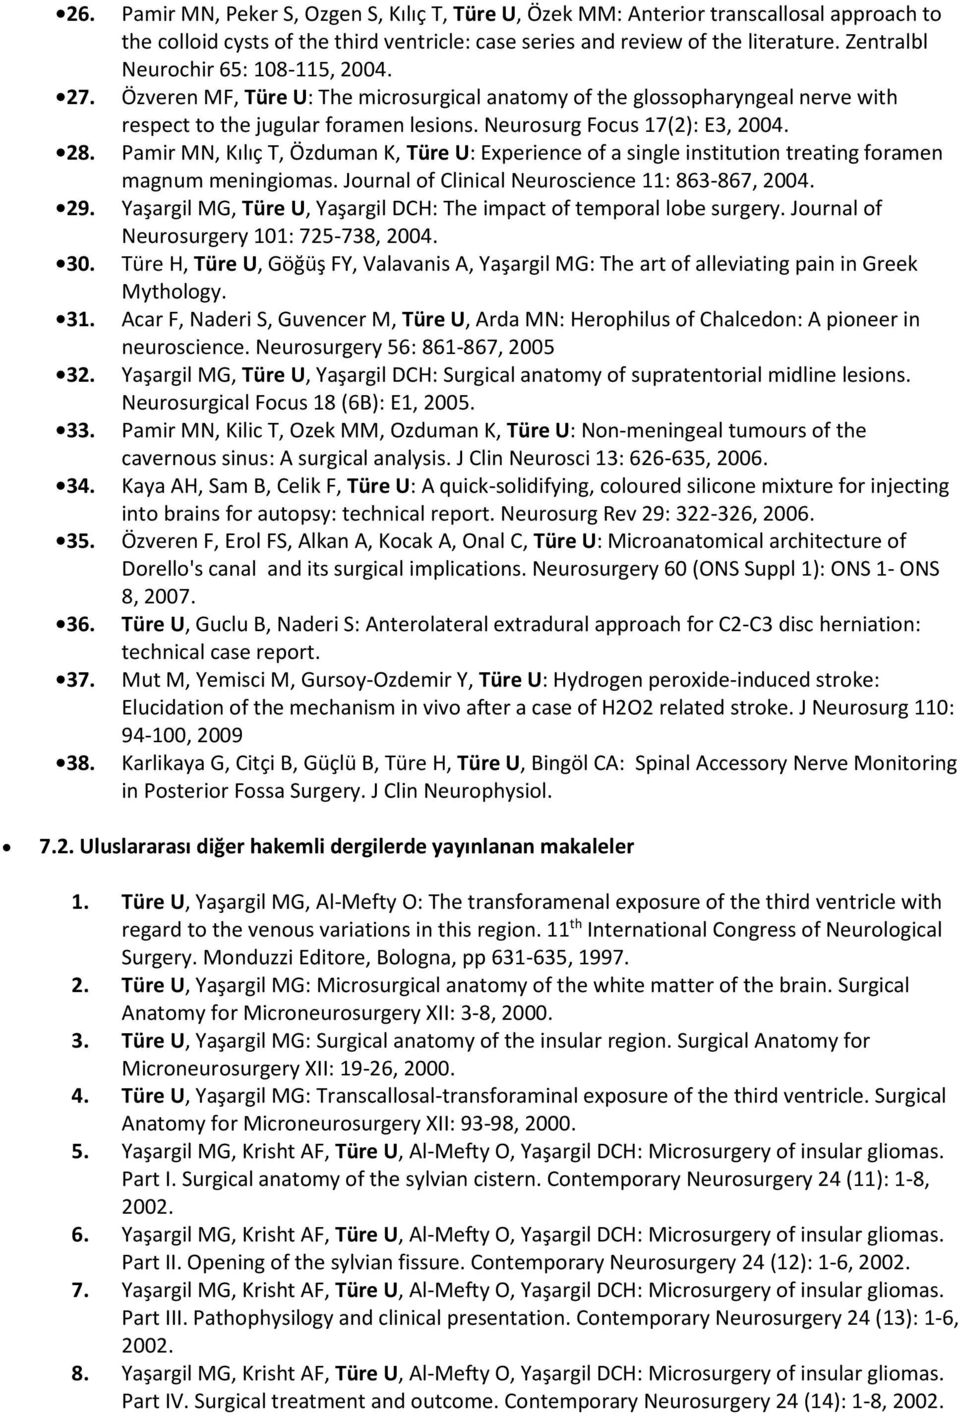 Zentralbl Neurochir 65: 108-115, 2004. Özveren MF, Türe U: The microsurgical anatomy of the glossopharyngeal nerve with respect to the jugular foramen lesions. Neurosurg Focus 17(2): E3, 2004.